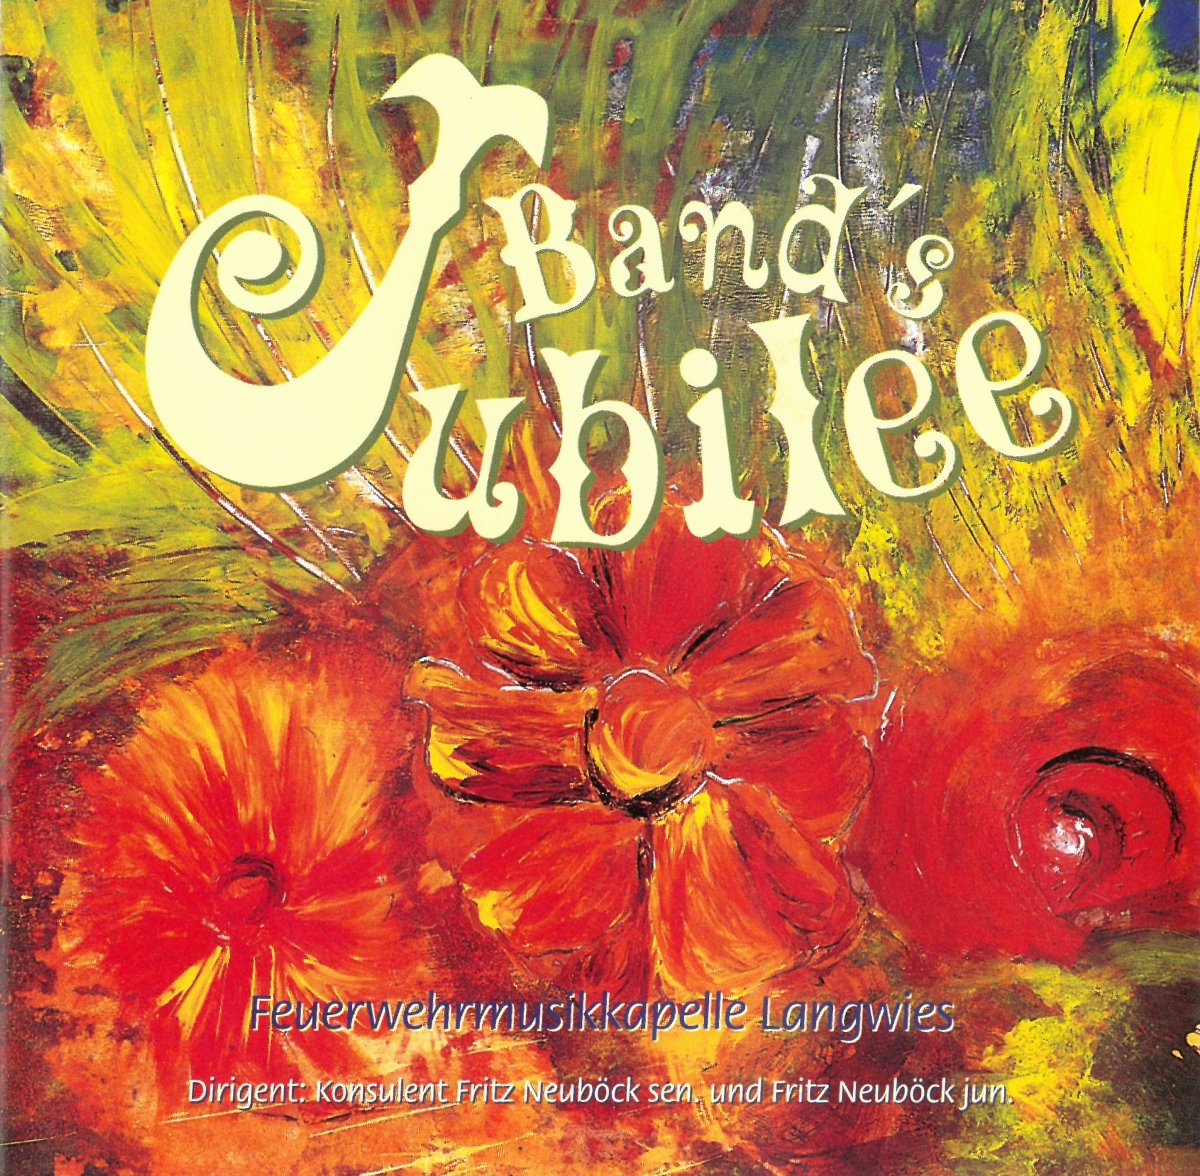 Band's Jubilee - clicca qui